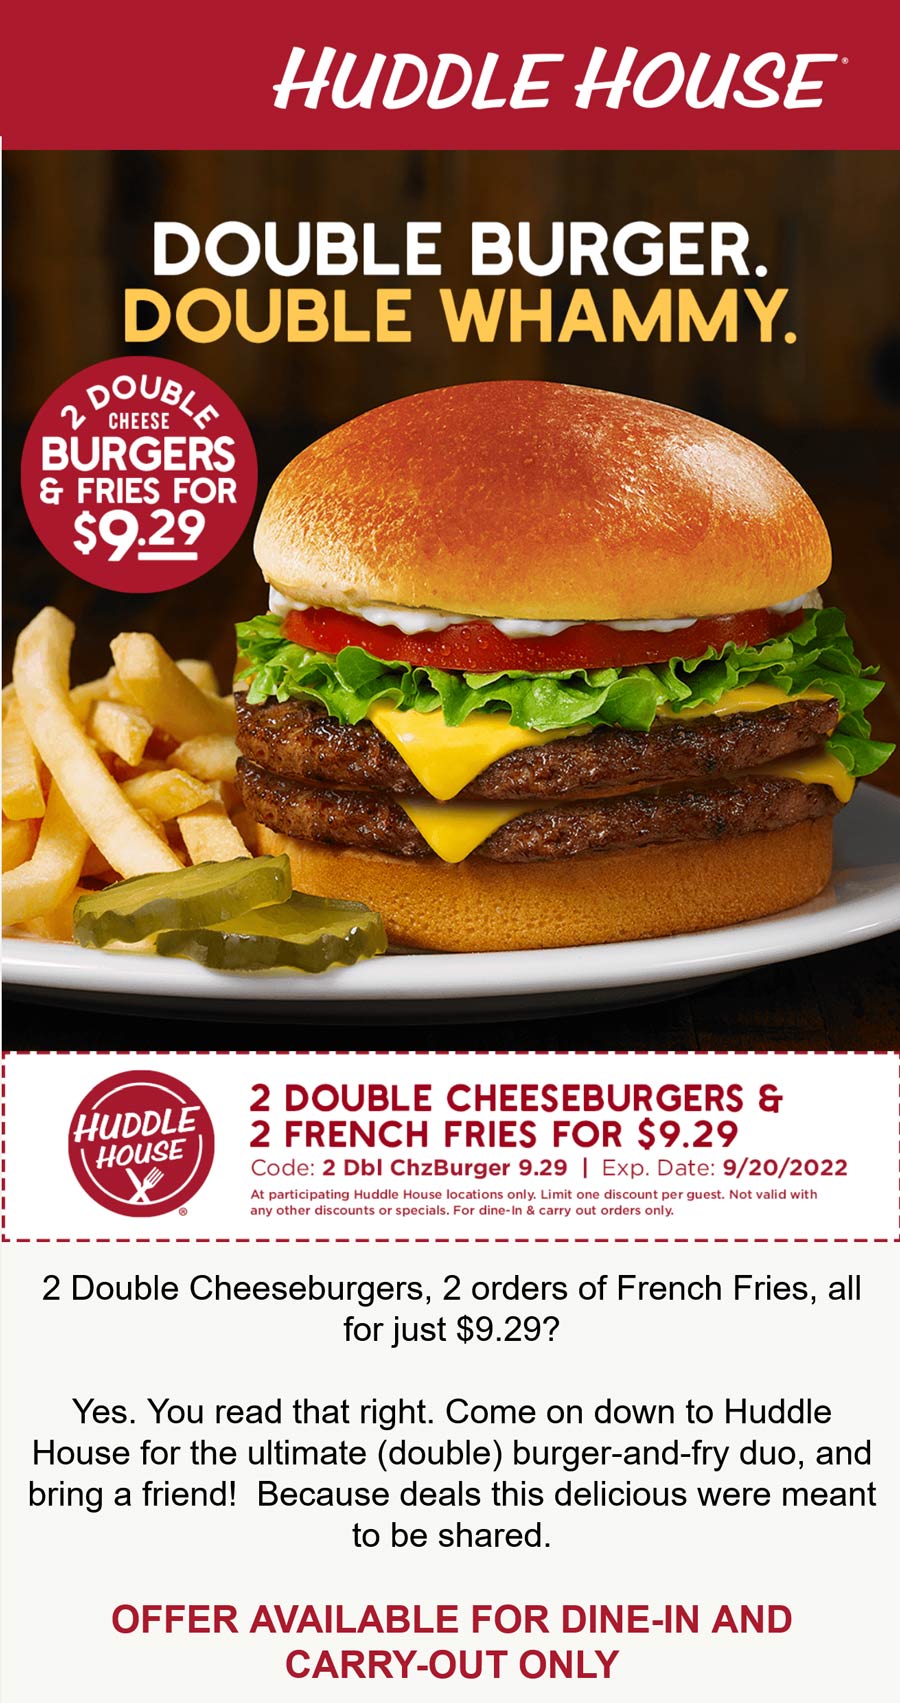 Huddle House restaurants Coupon  2 double cheeseburgers + fries = $9.29 at Huddle House restaurants #huddlehouse 